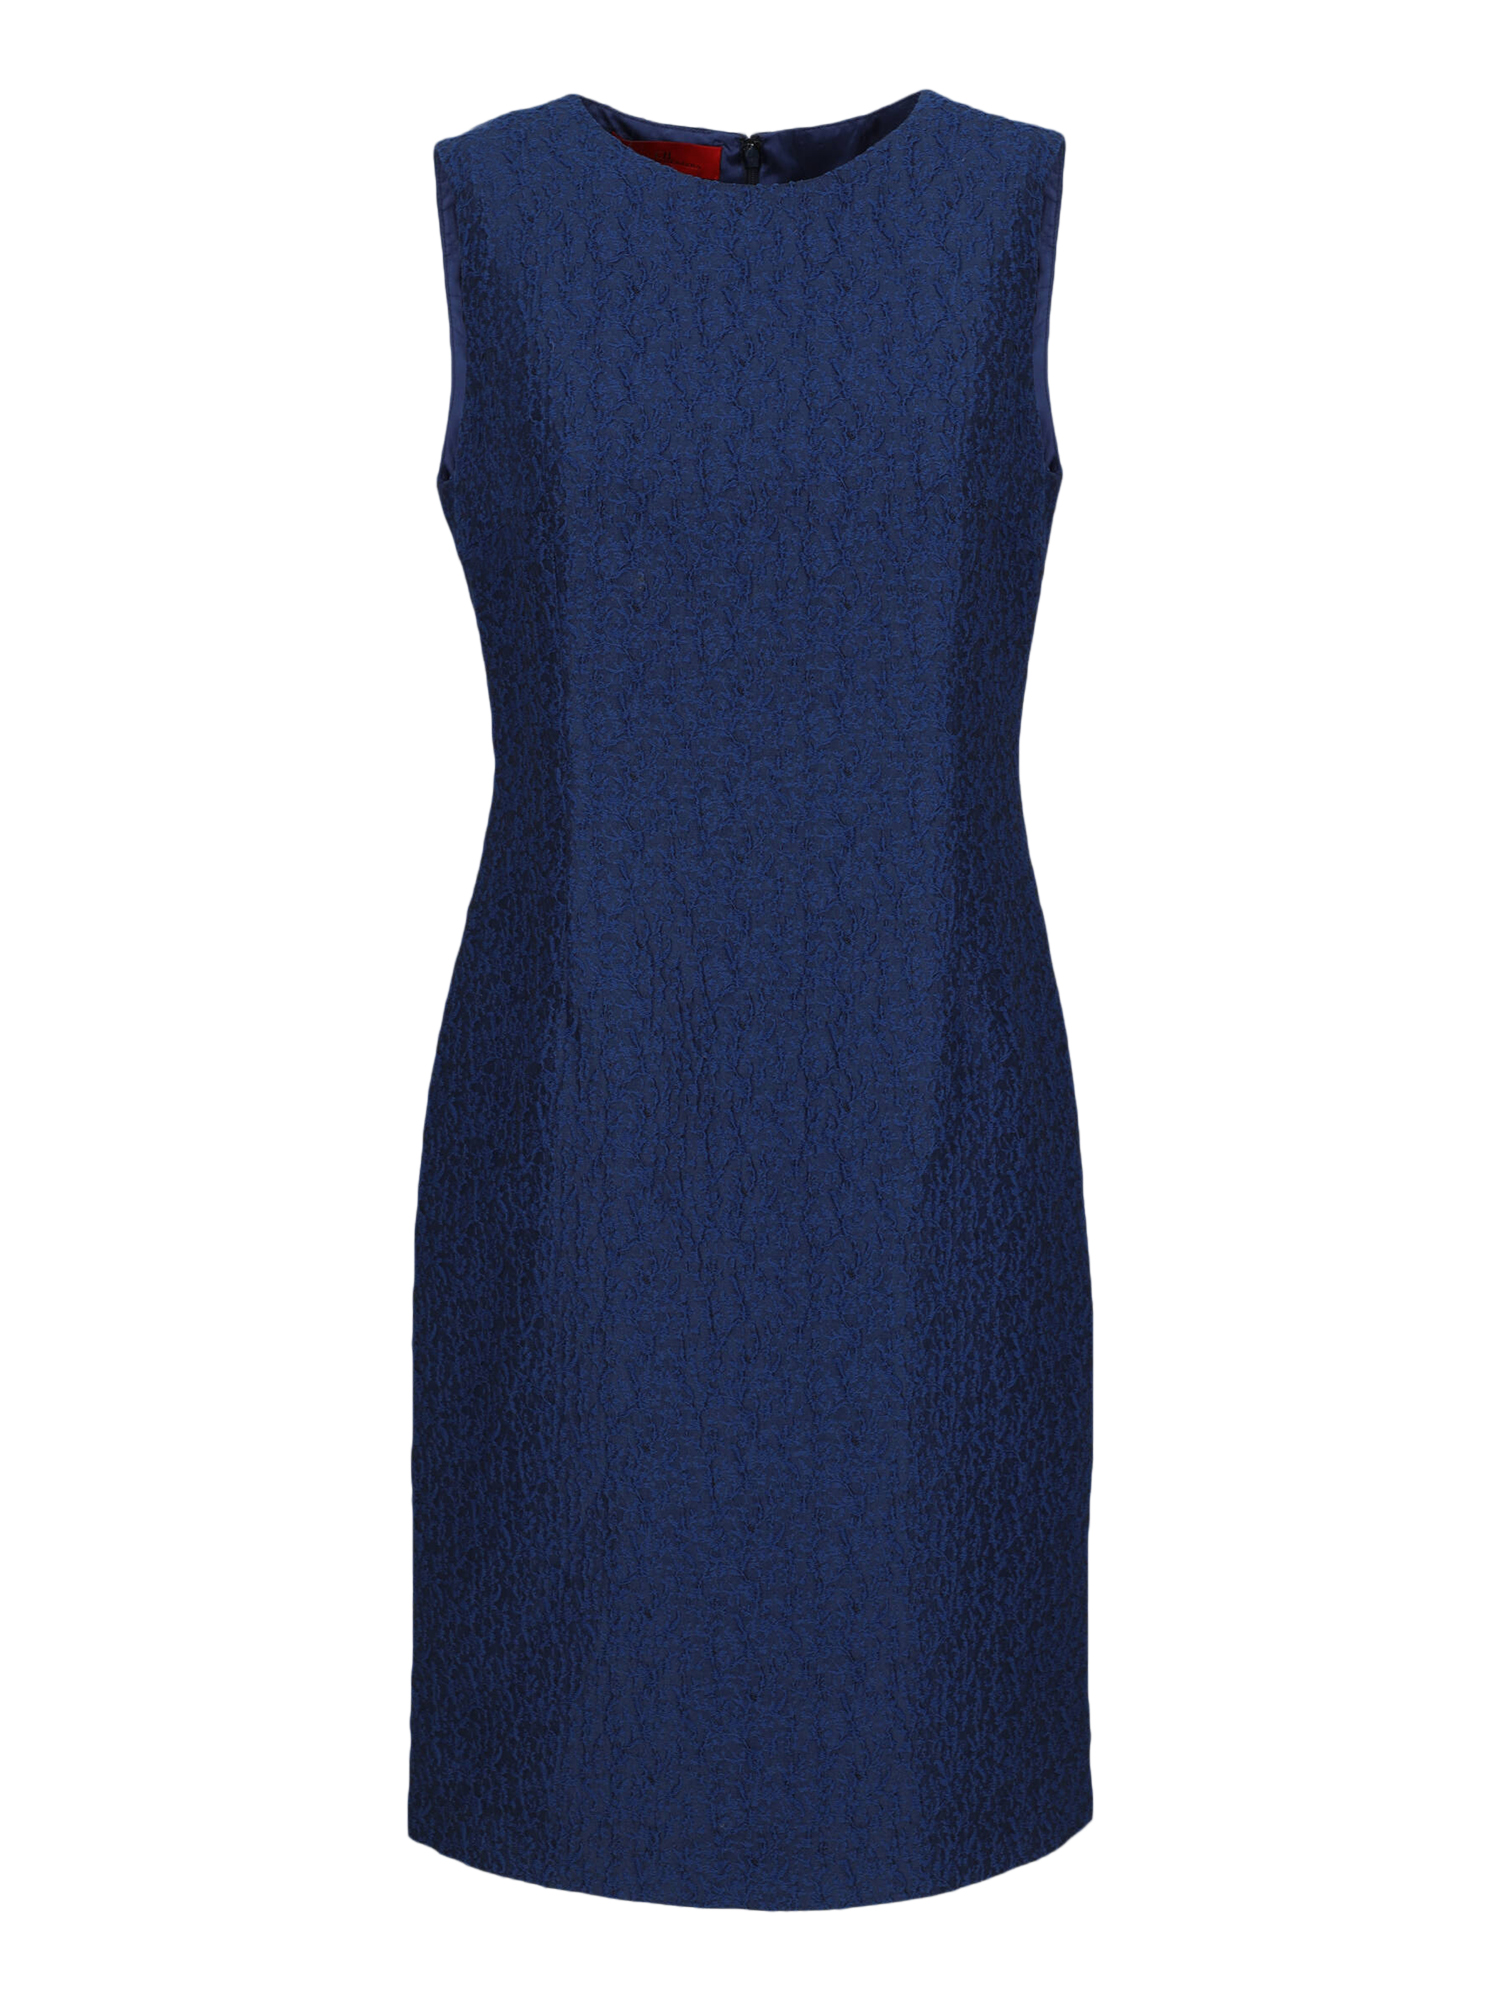 Robes Pour Femme - Carolina Herrera - En Synthetic Fibers Navy - Taille:  -